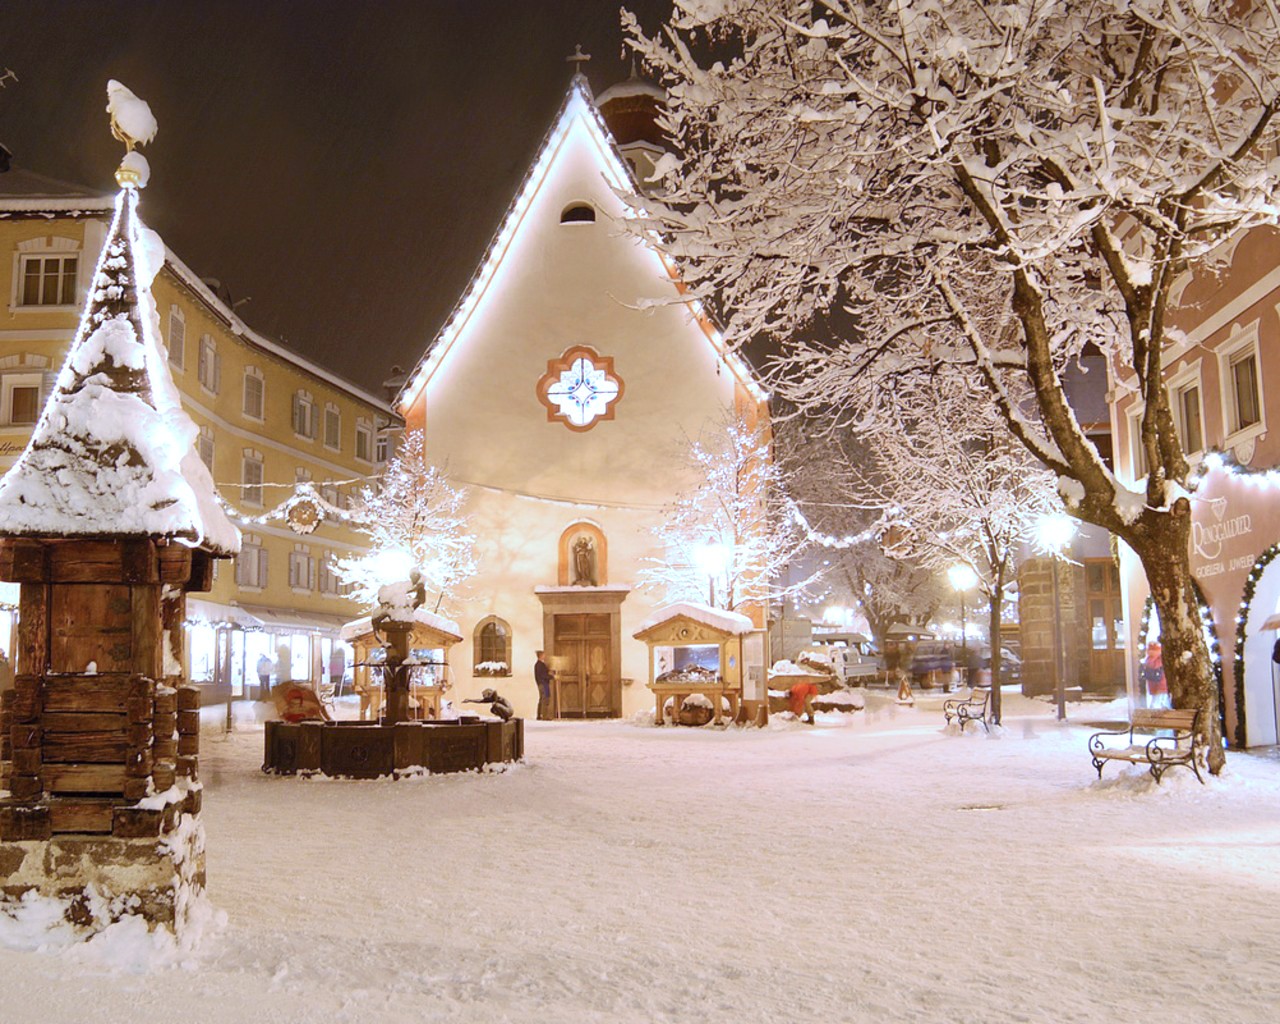 General 1280x1024 snow church winter city street light town square